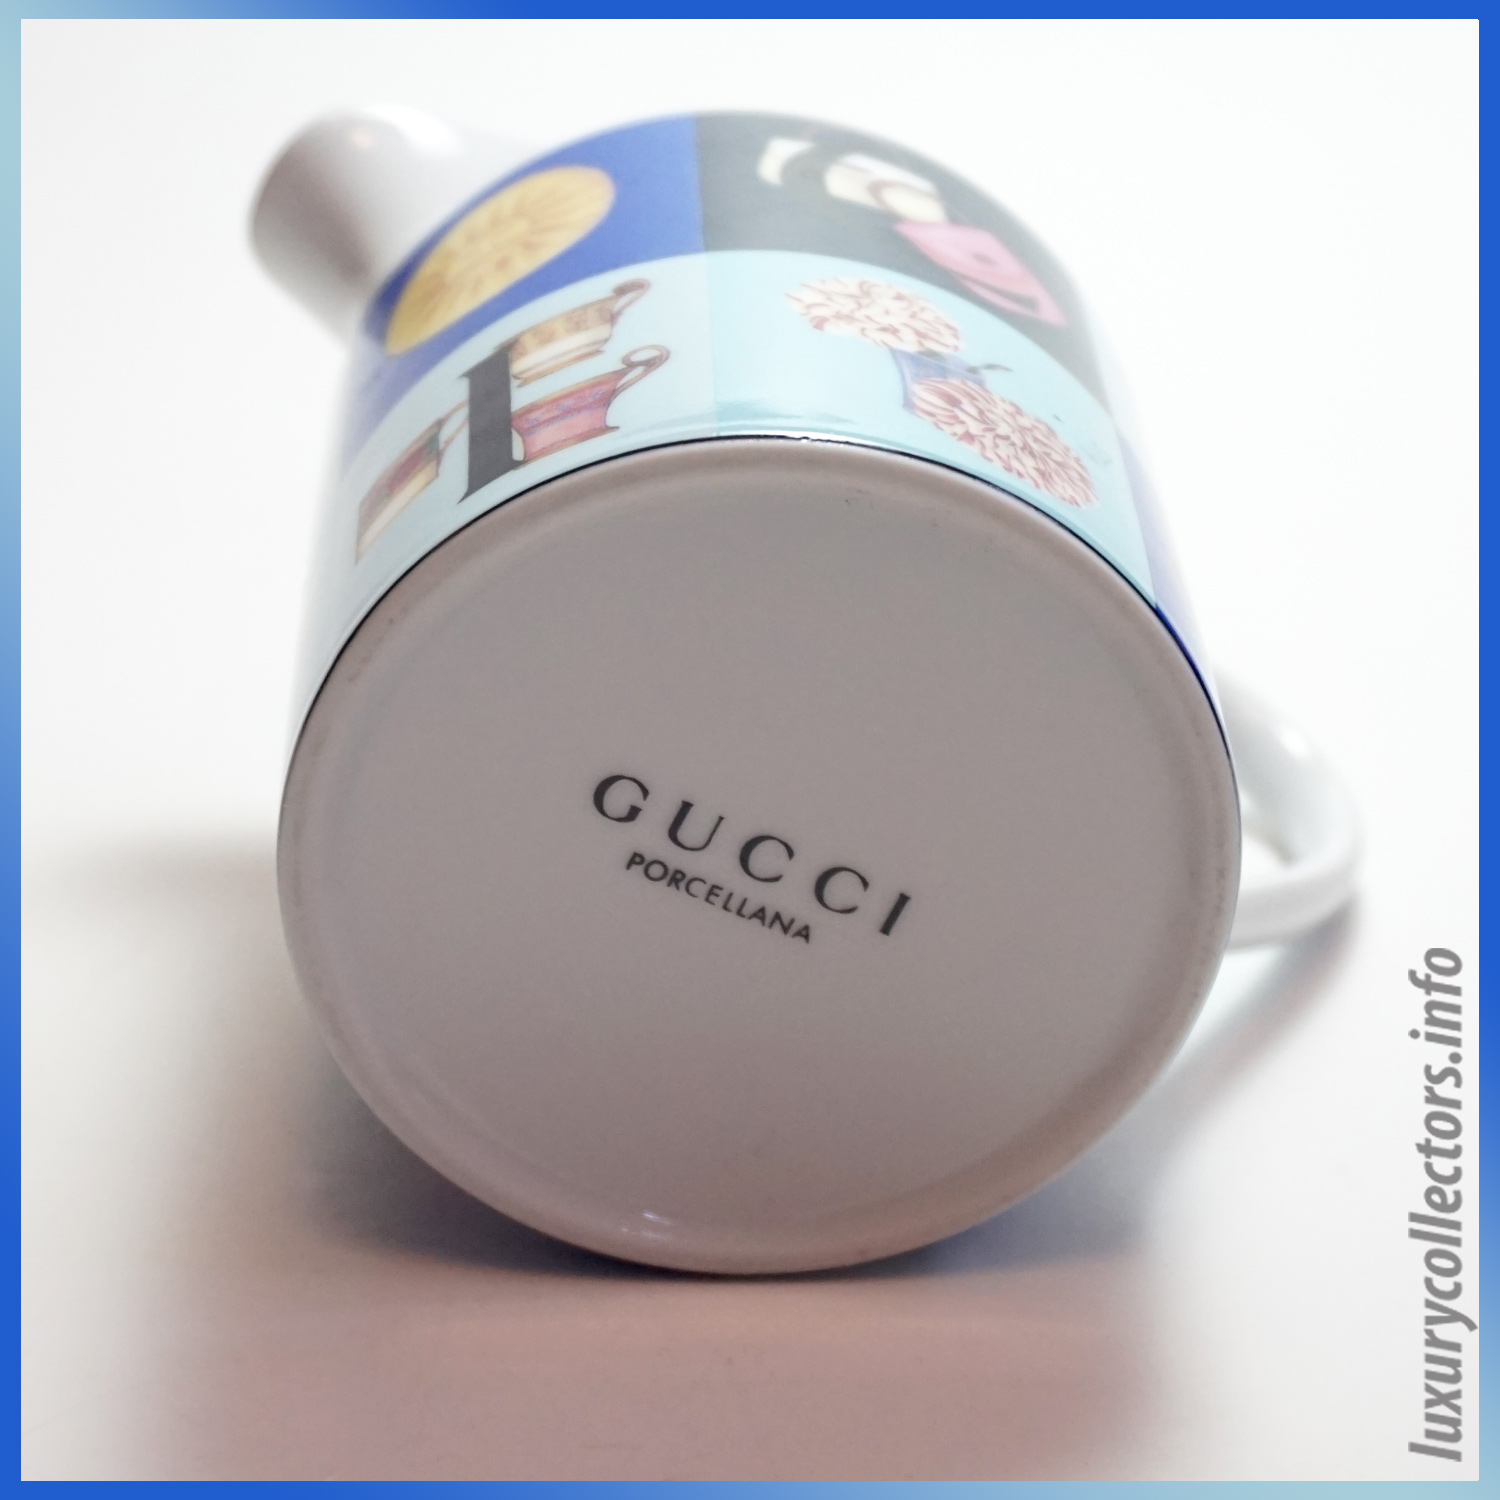 Gucci Home Housewares Tea Pot Coffee China Porcellana Creamer Milk Cream Bottom